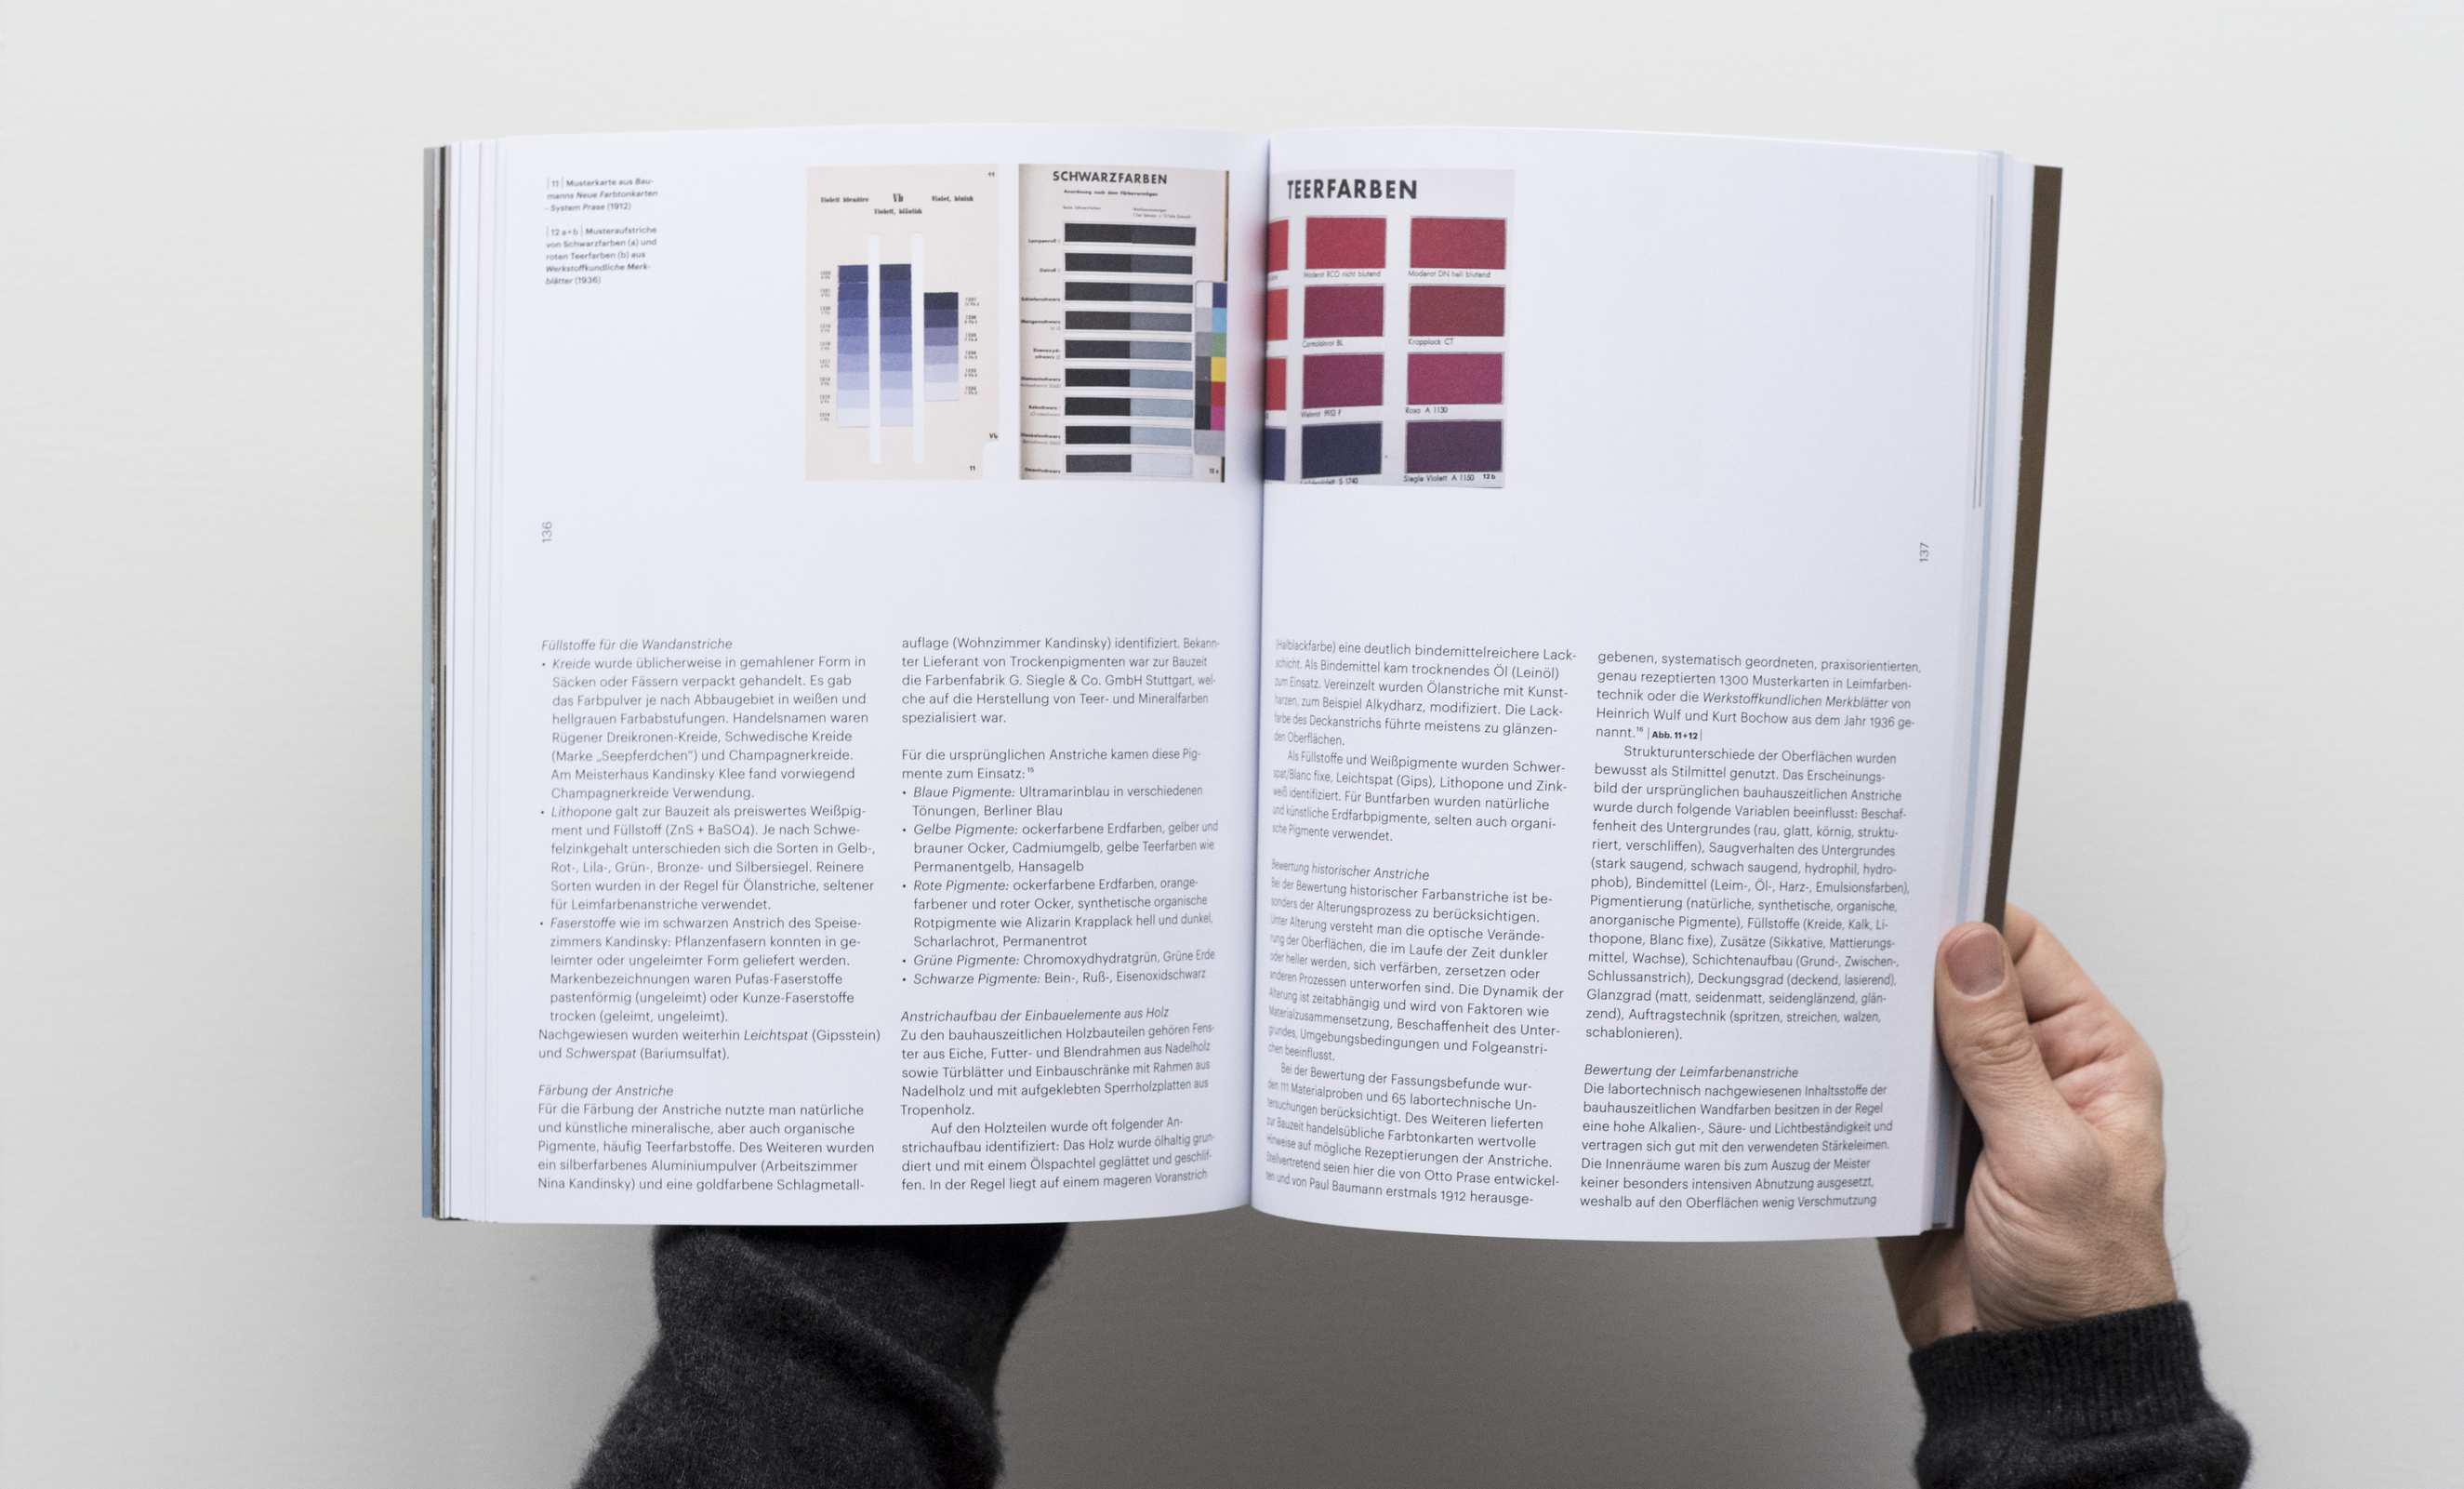 meisterhaus-kandinsky-klee-book-14-2650x1600px